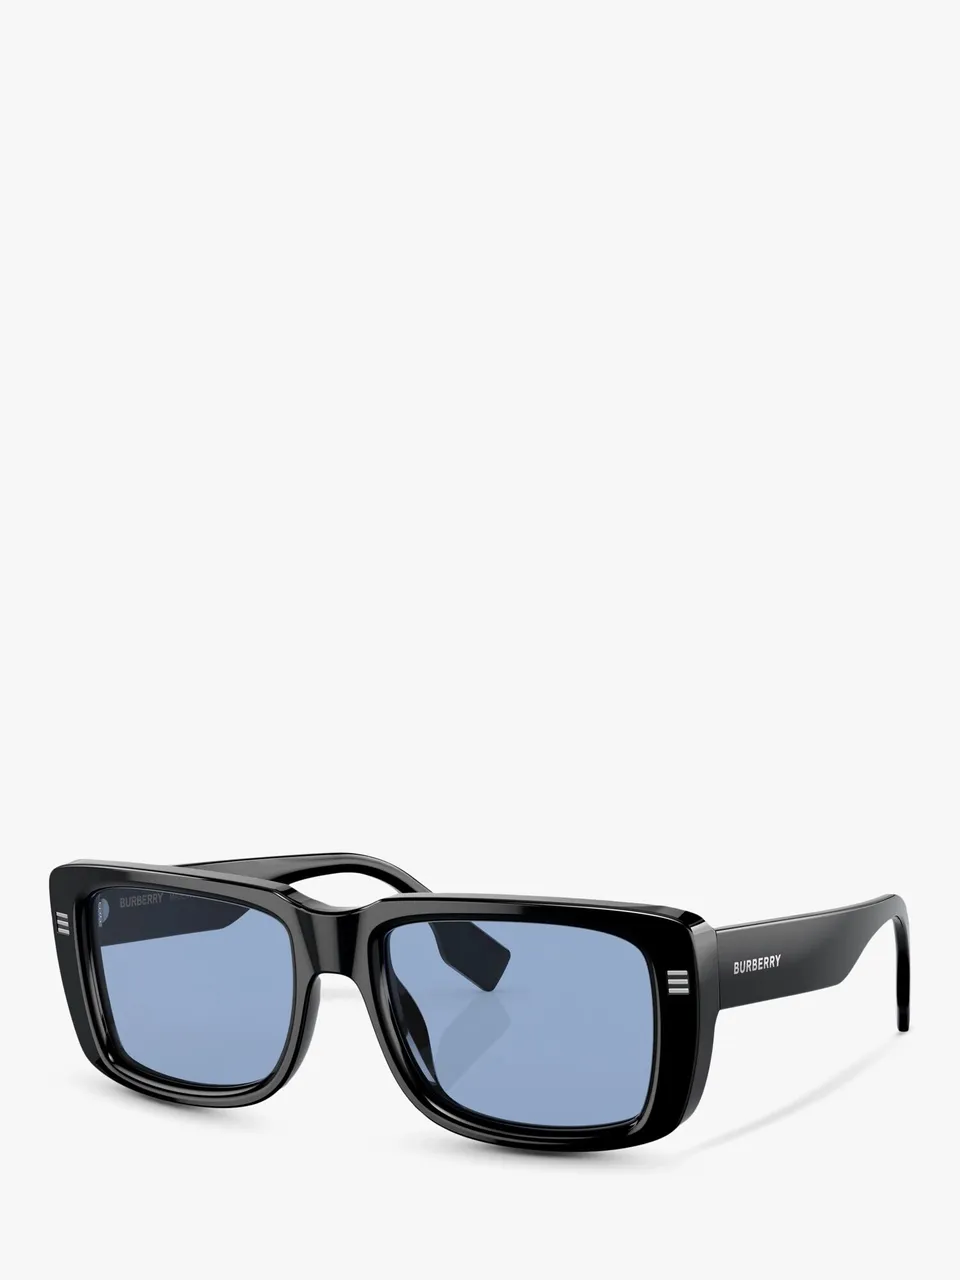 Burberry BE4376U Men's Rectangular Sunglasses, Black - Black - Male